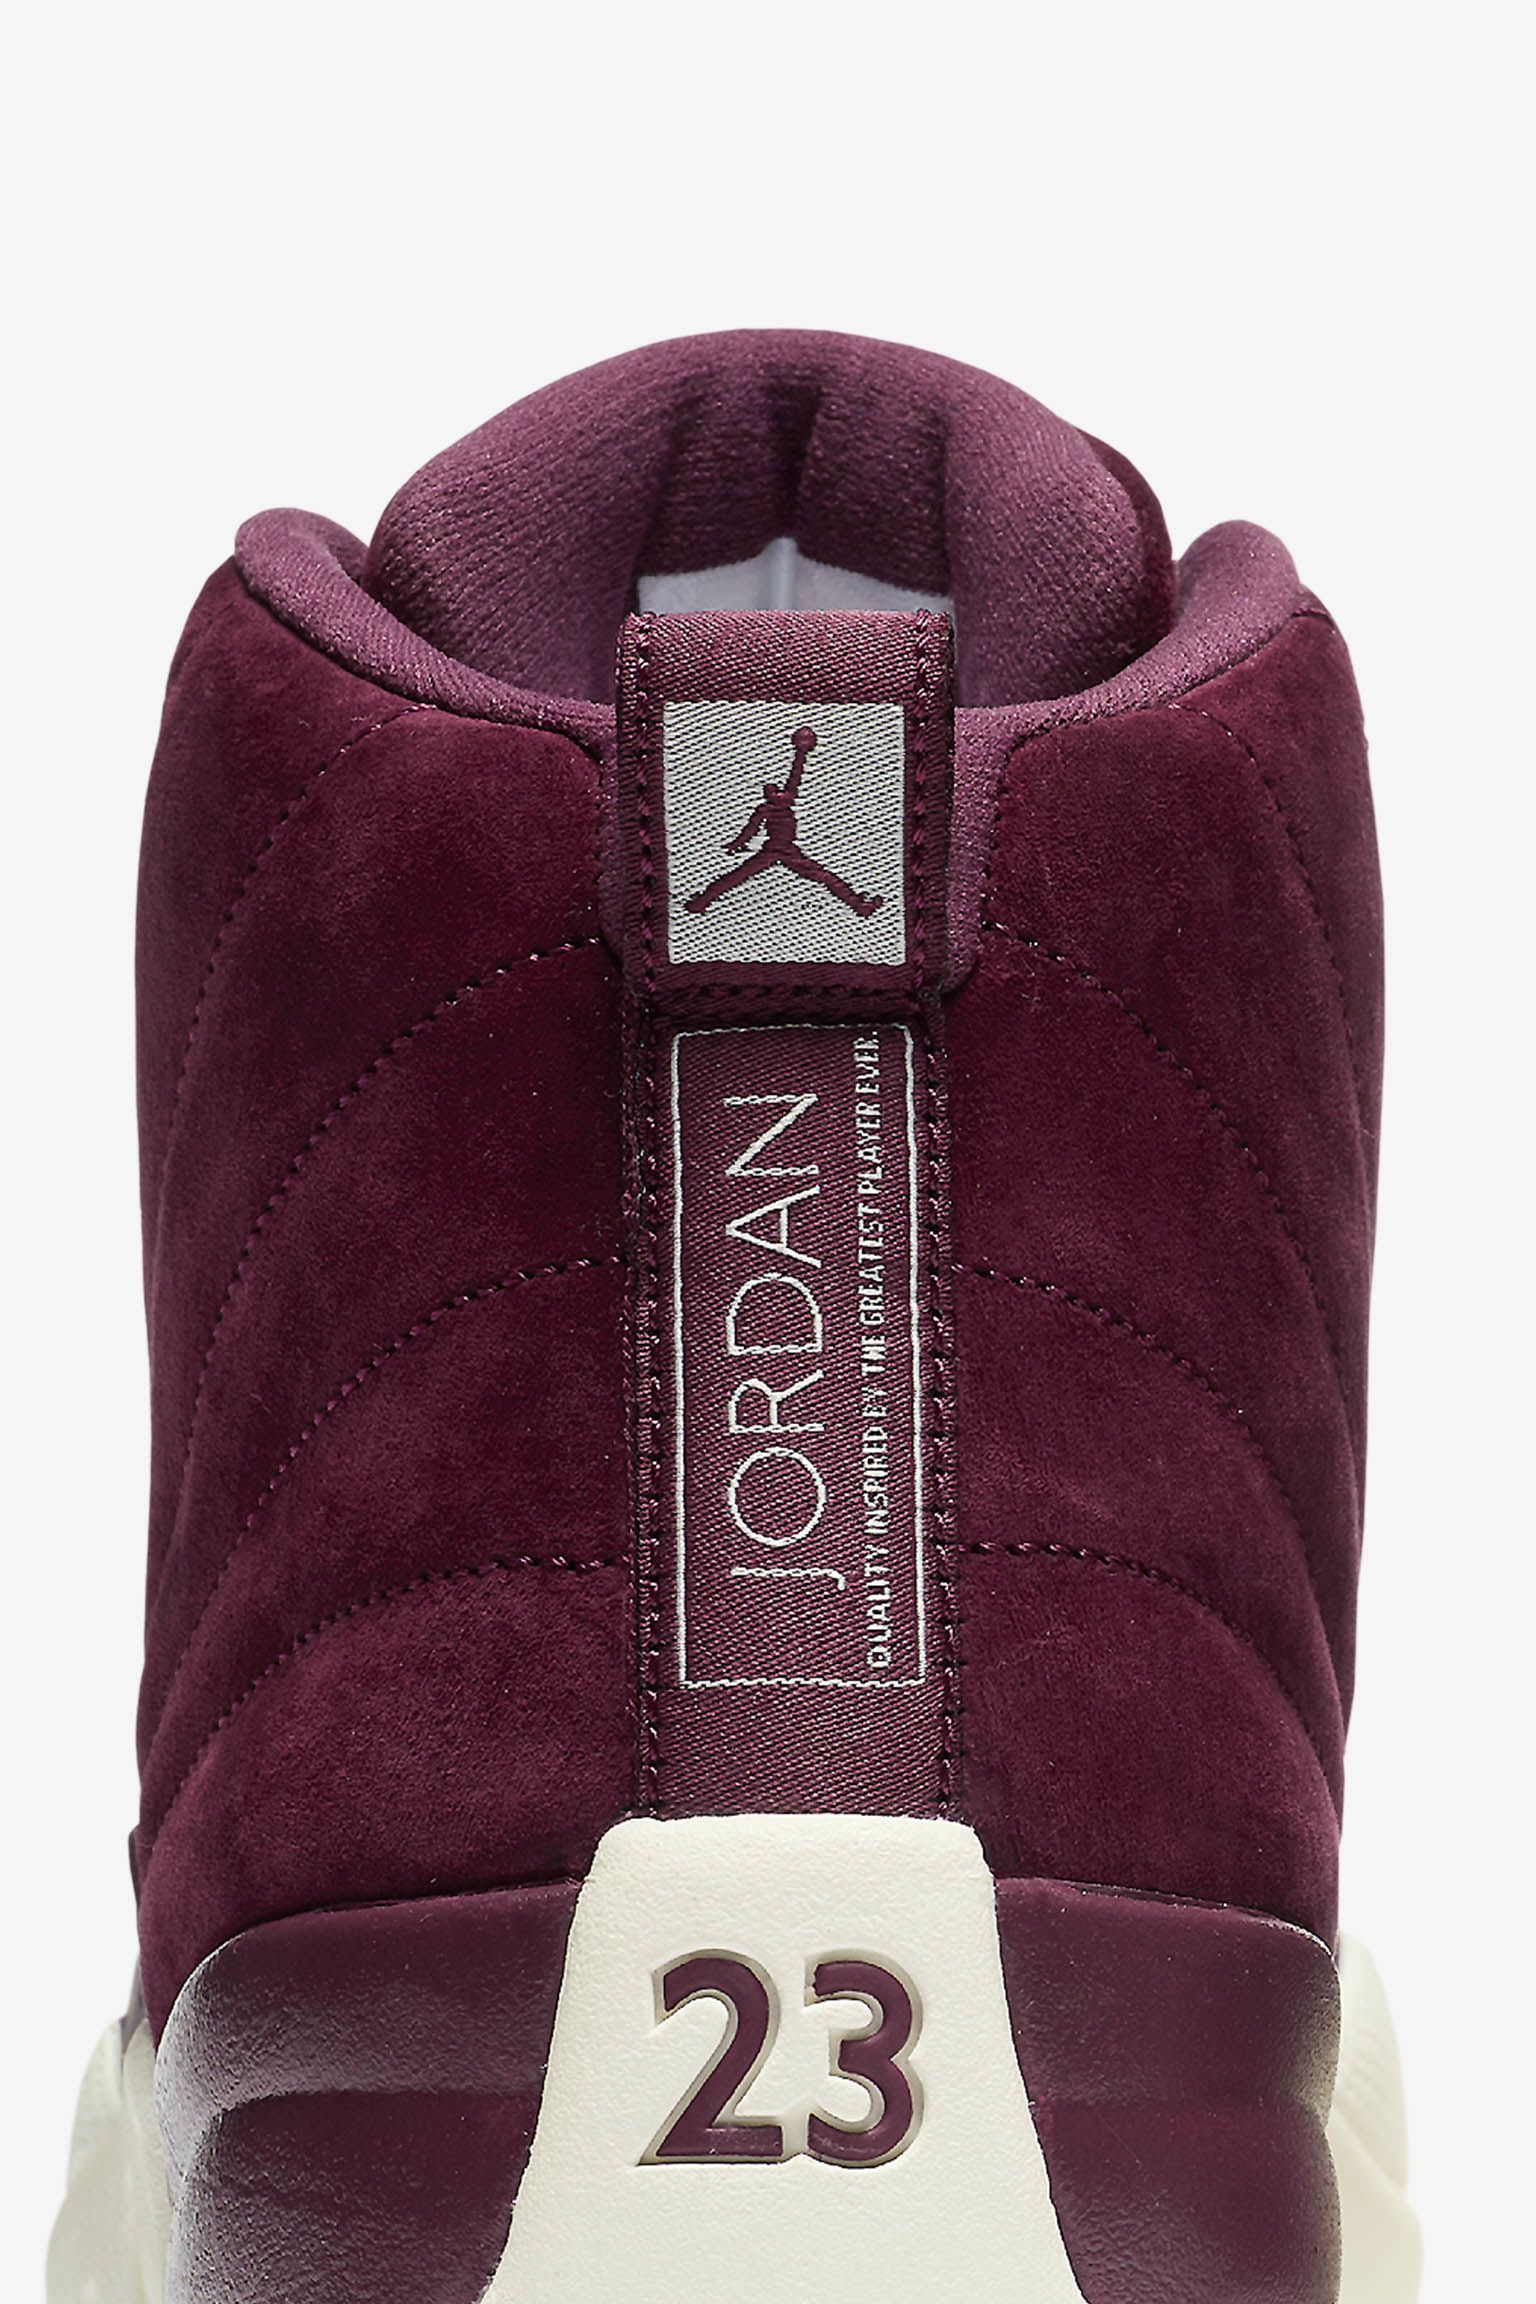 Air Jordan 12 Retro 'Bordeaux' Release Date. Nike